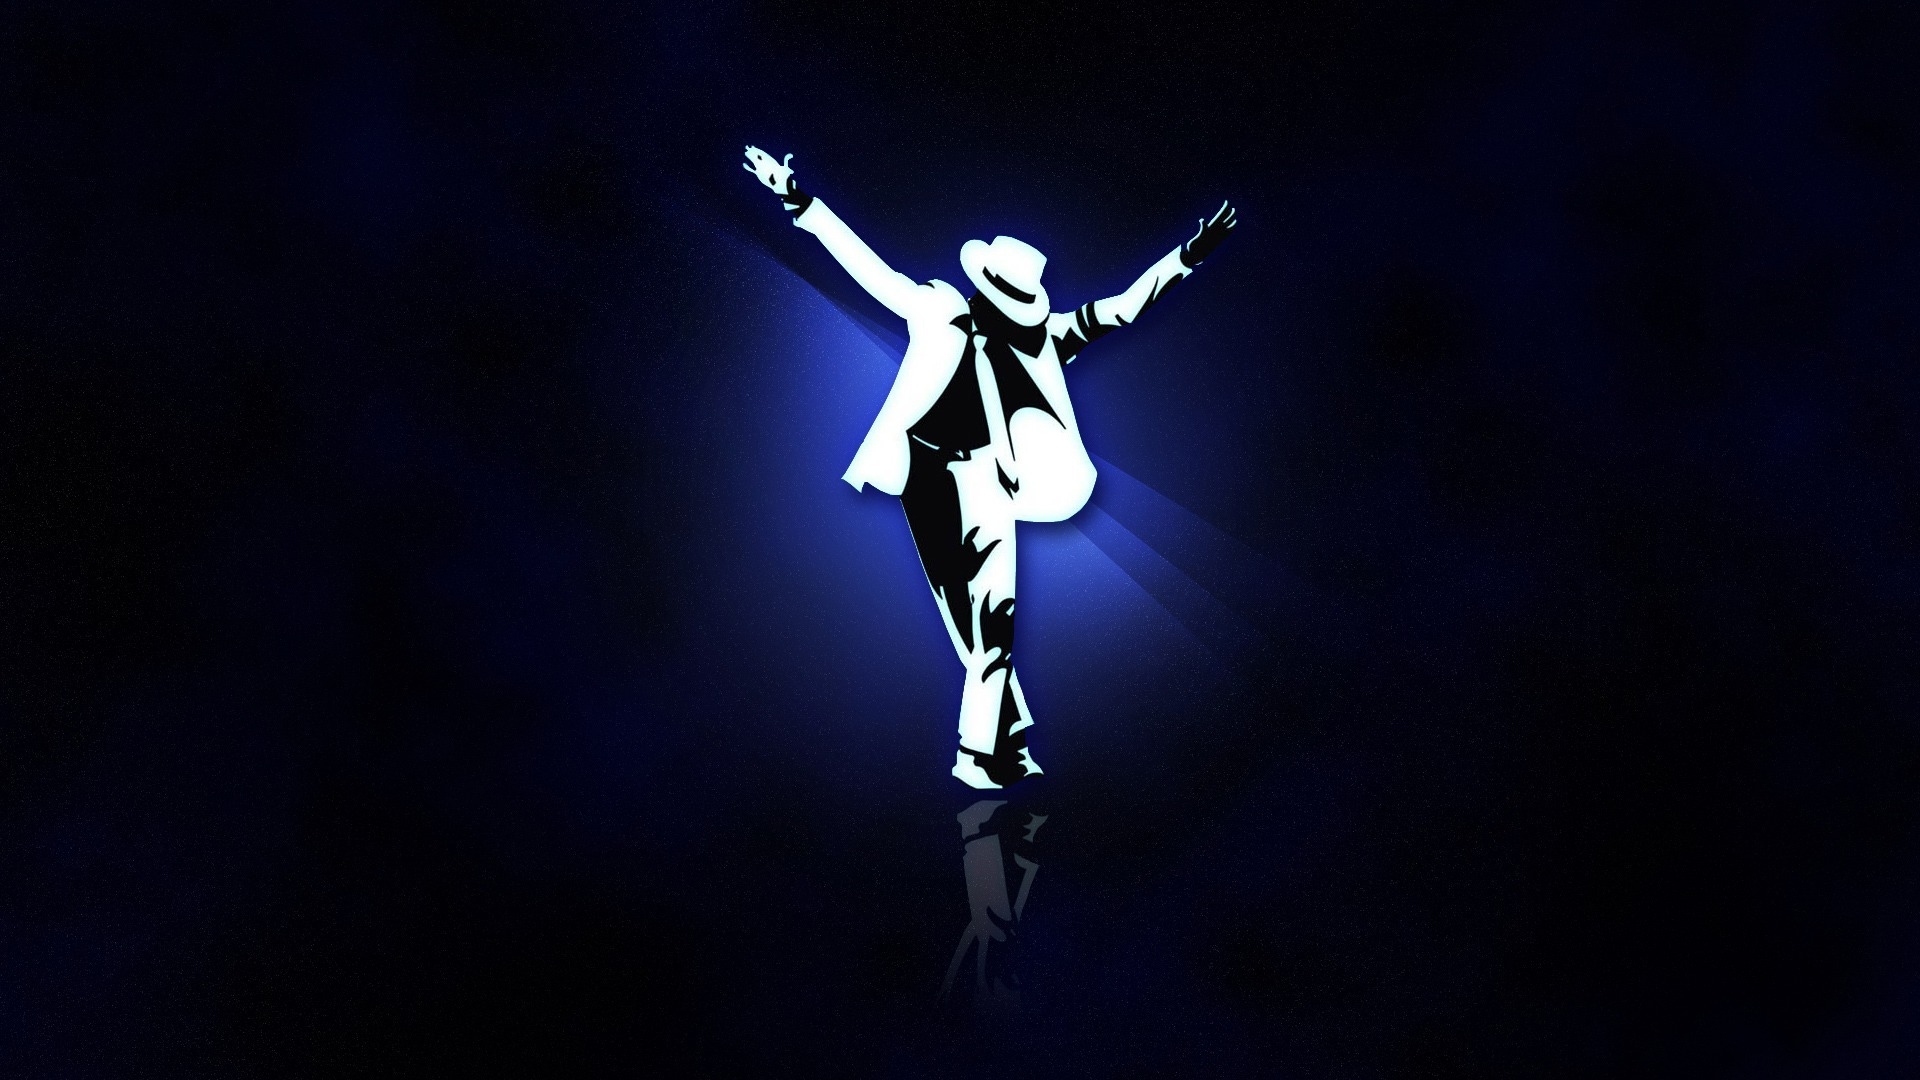 Michael Jackson Tribute for 1920 x 1080 HDTV 1080p resolution